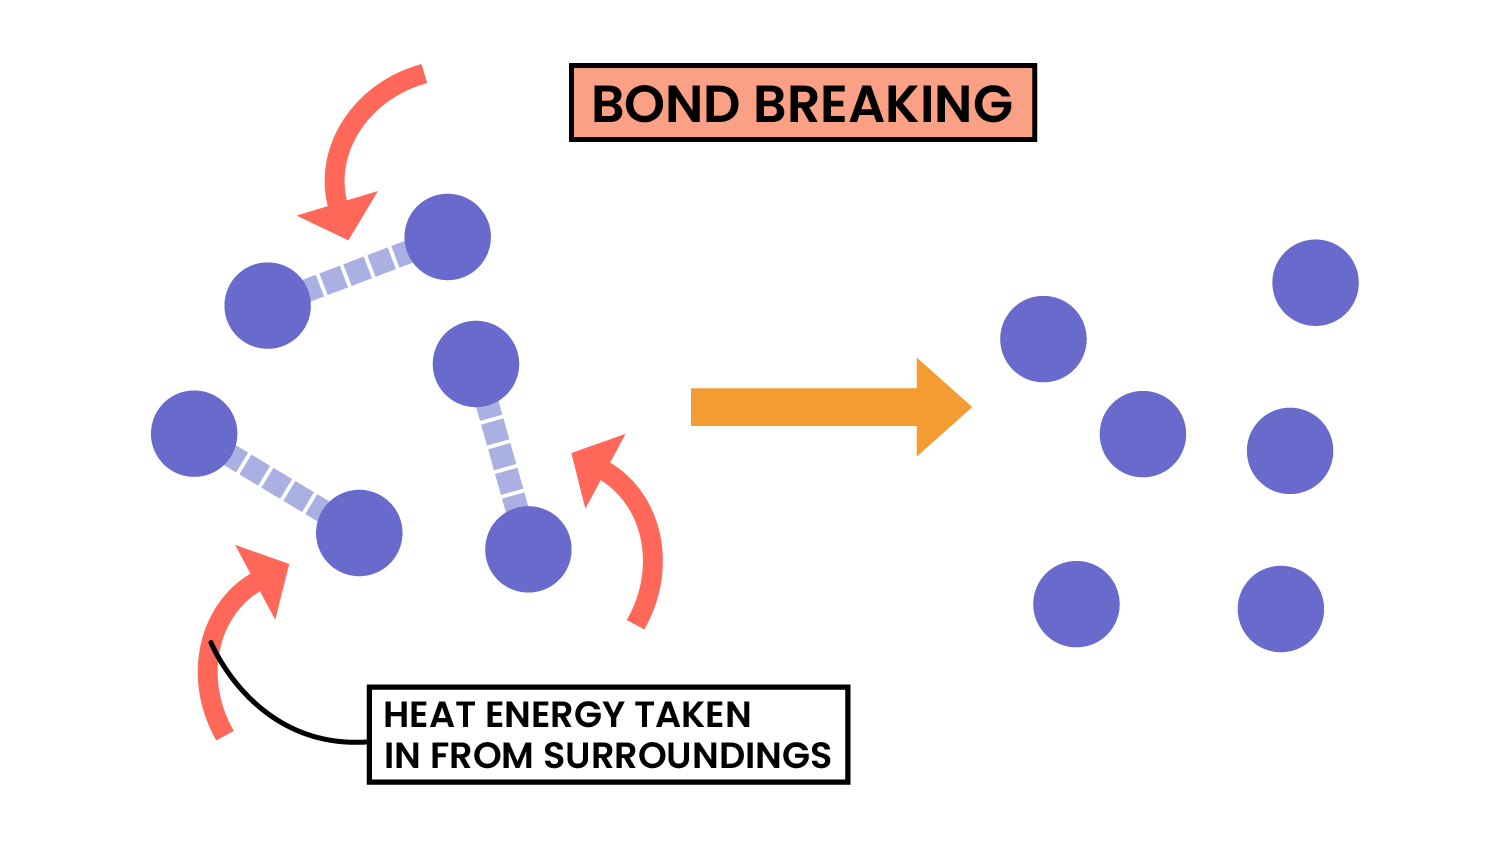 edexcel_igcse_chemistry_topic 18_energetics_006_bond breaking diagram energy labelled